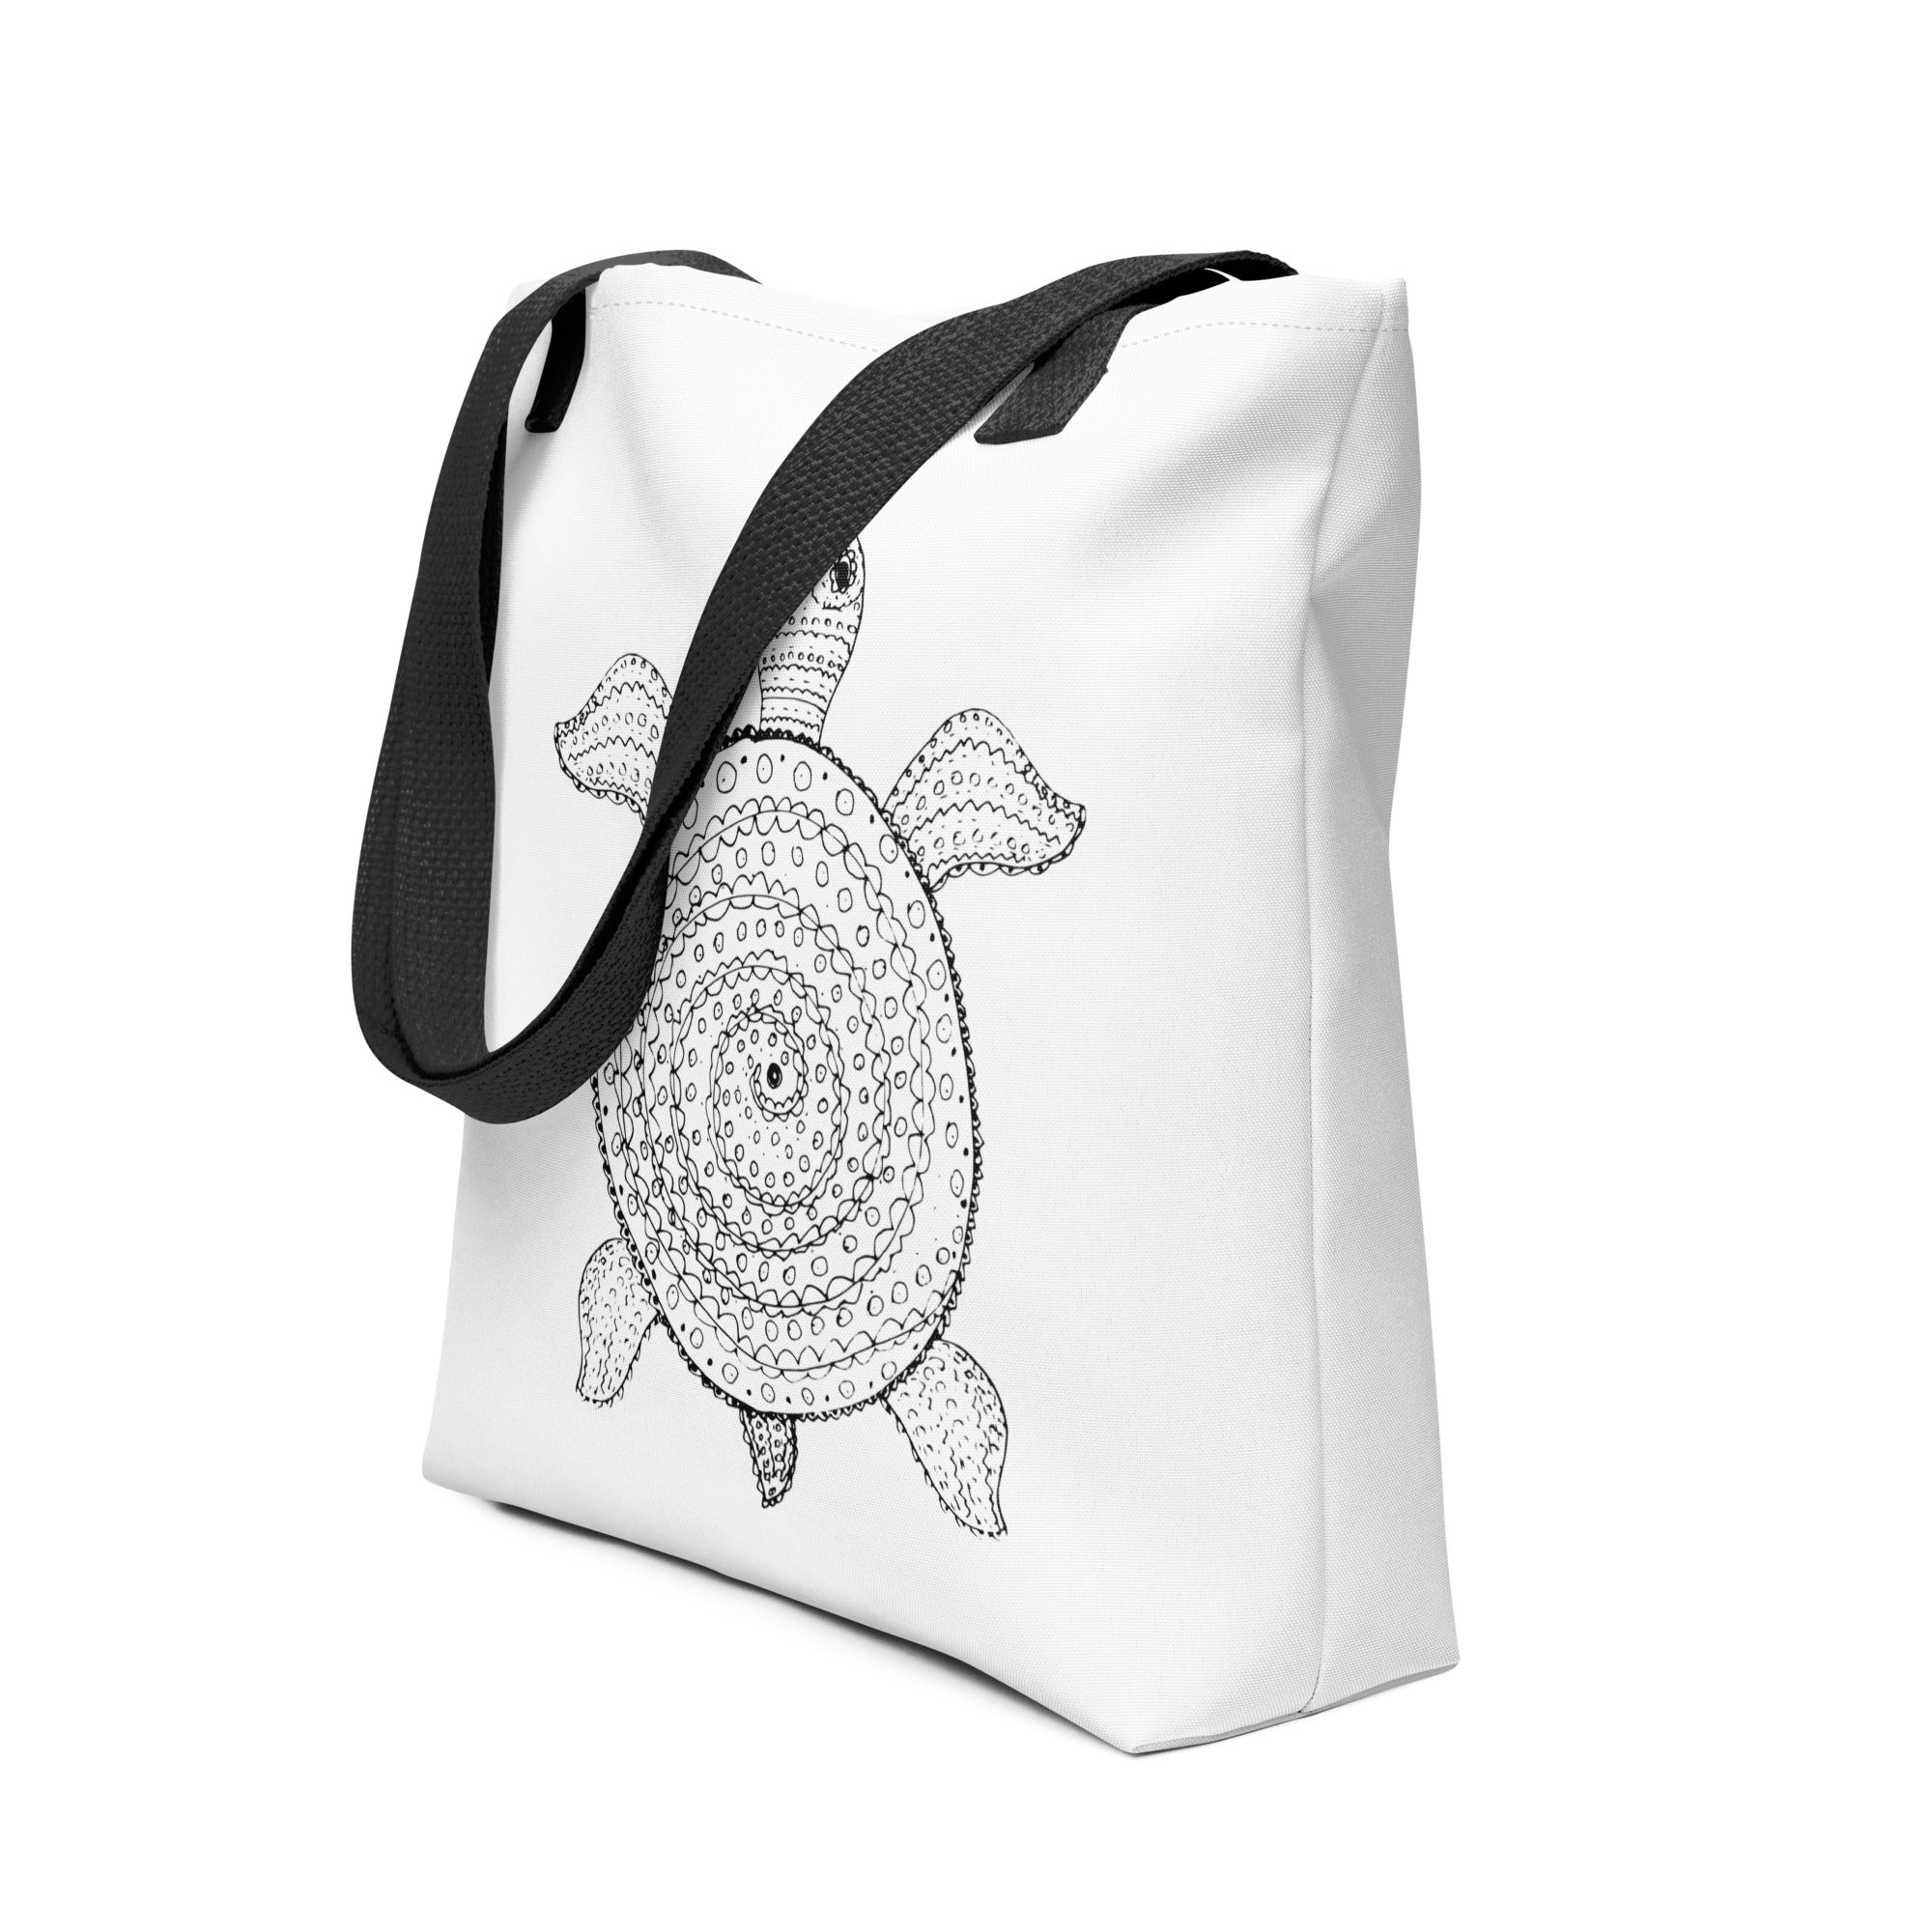 Tote bag- Ocean life Turtle